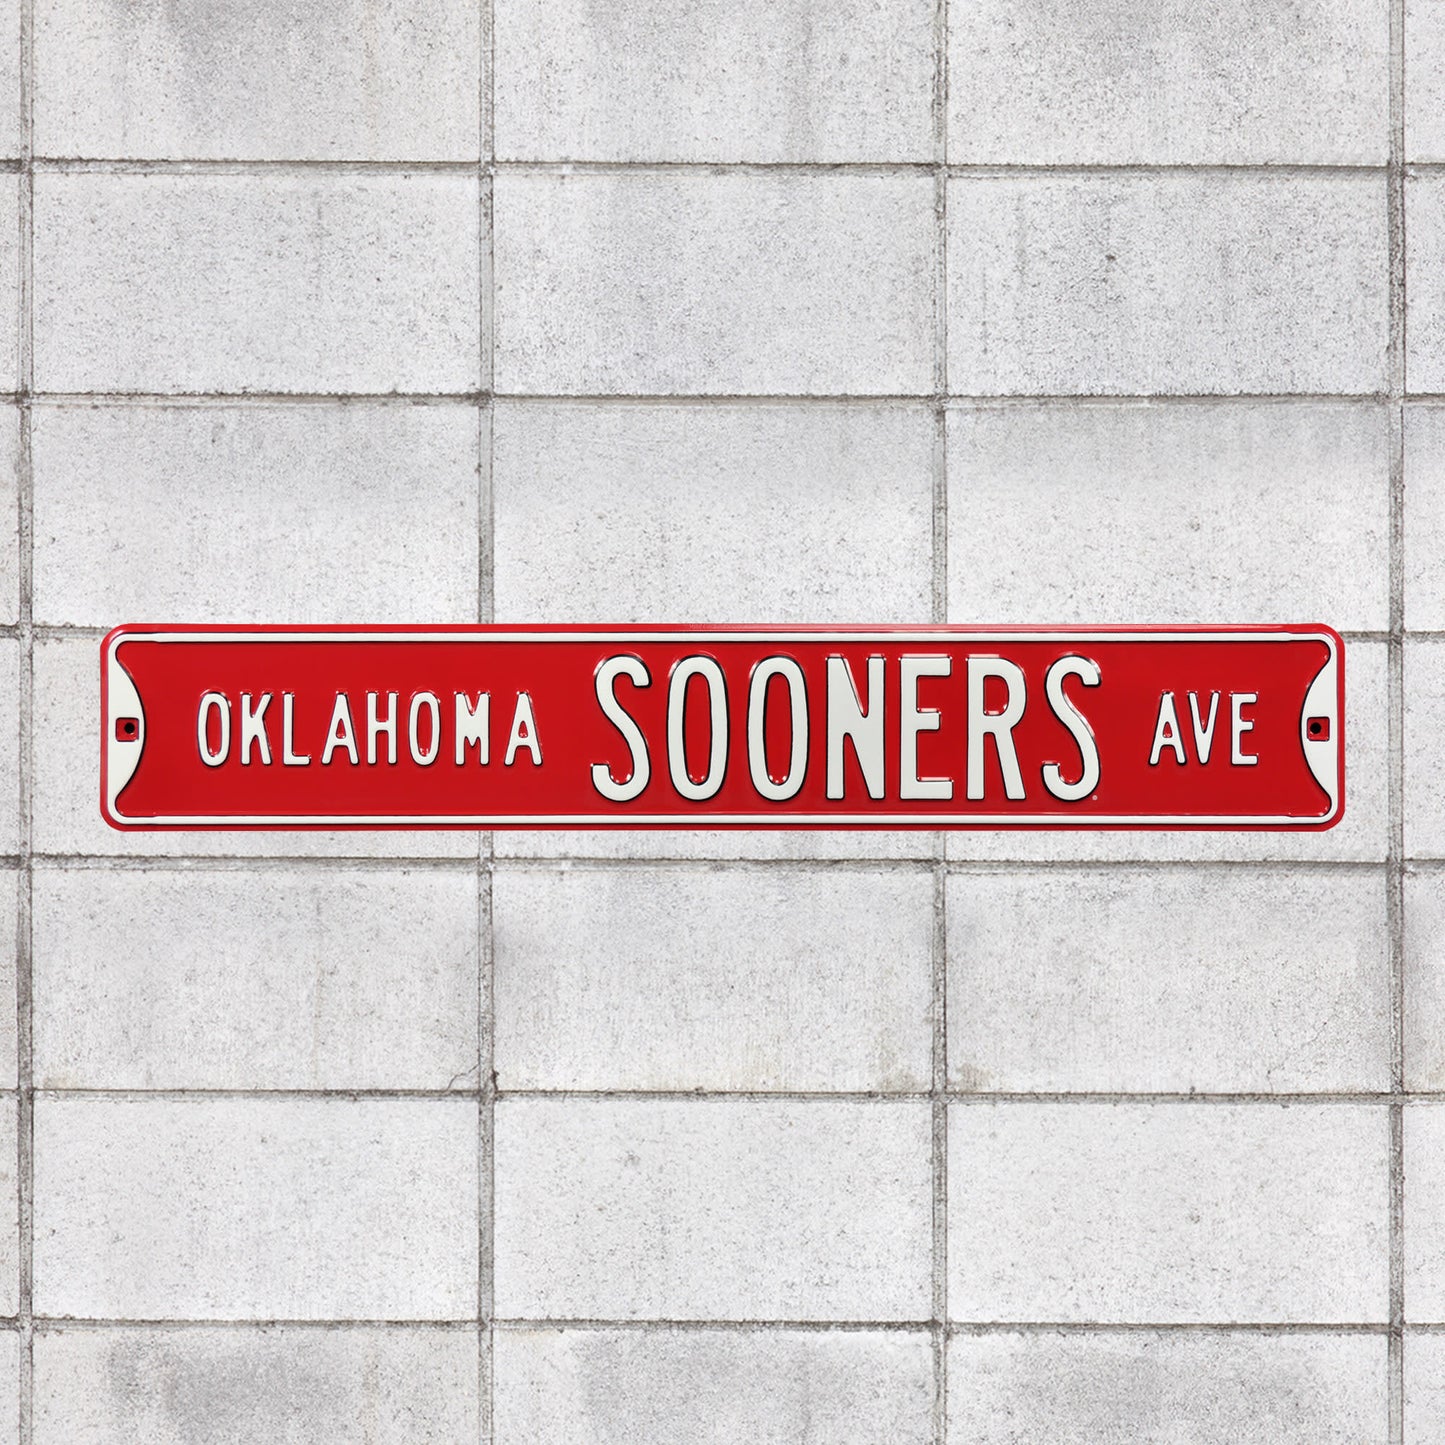 Oklahoma Sooners: Oklahoma Sooners Avenue - Officially Licensed Metal Street Sign